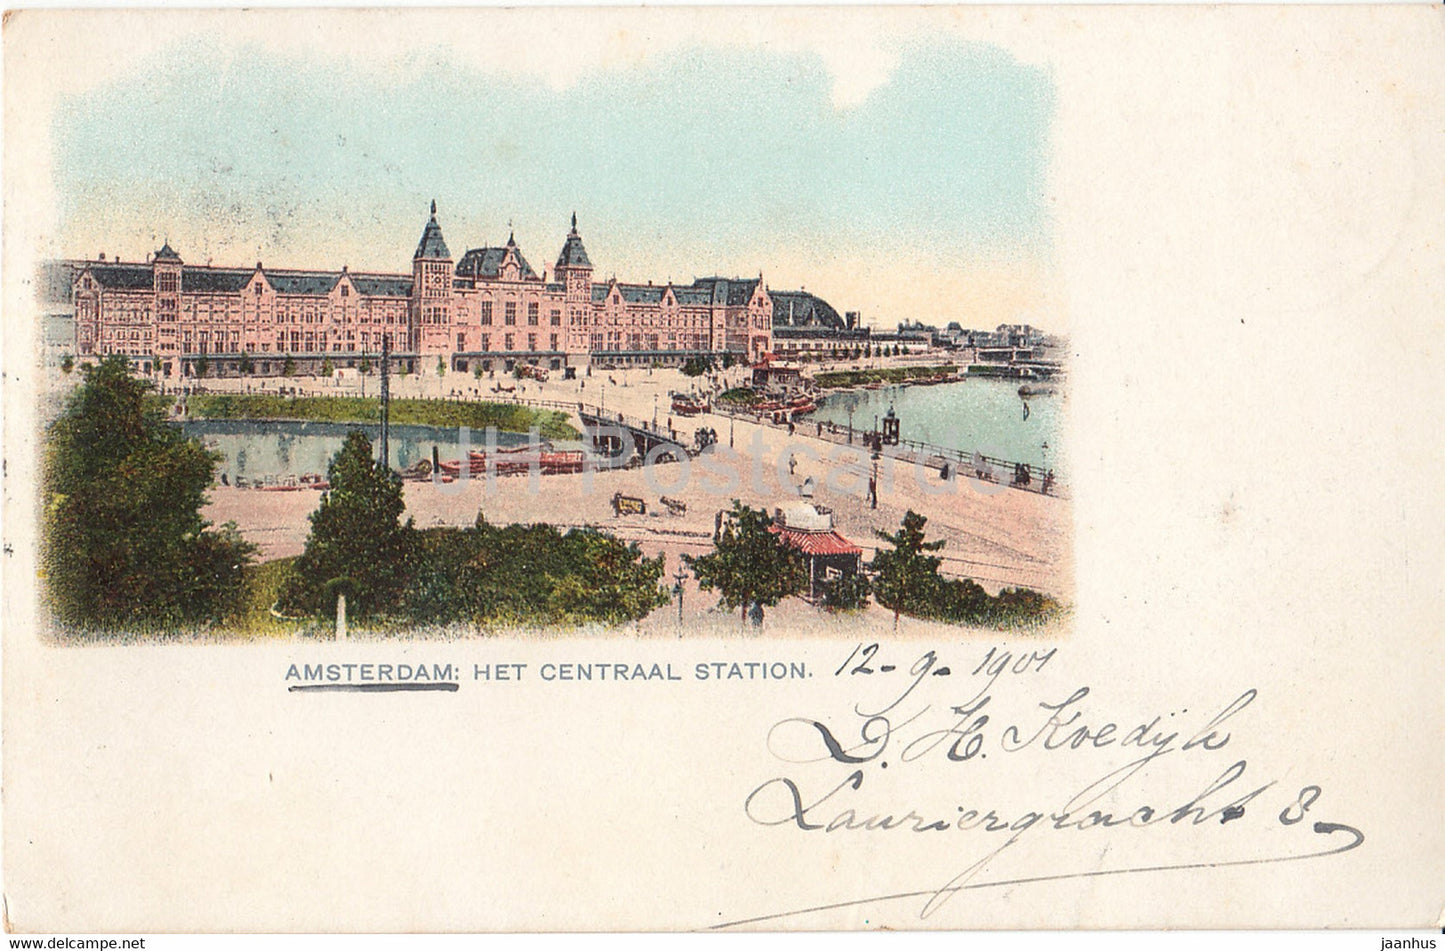 Amsterdam - Het Centraal Station - railway station - old postcard - 1901 - Netherlands - used - JH Postcards